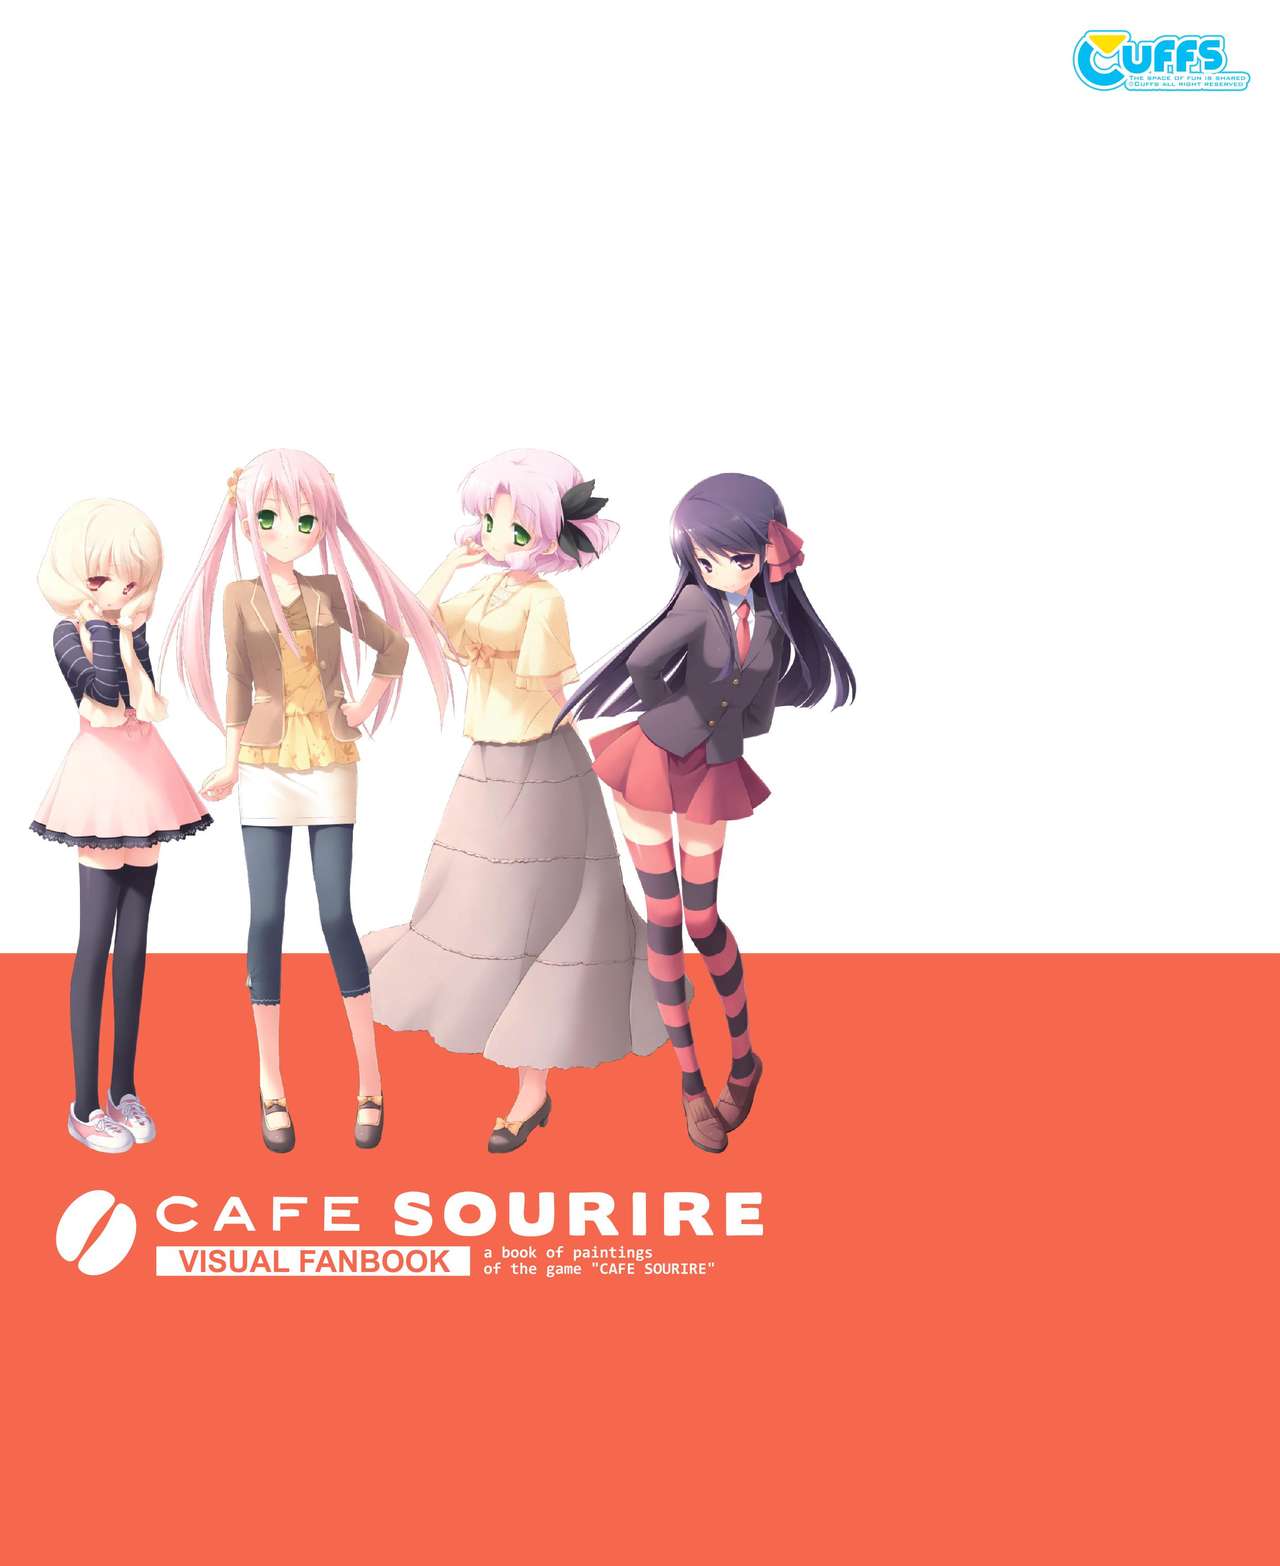 CAFE SOURIRE VFB 電子書籍（恋課金同梱特典再編集版）